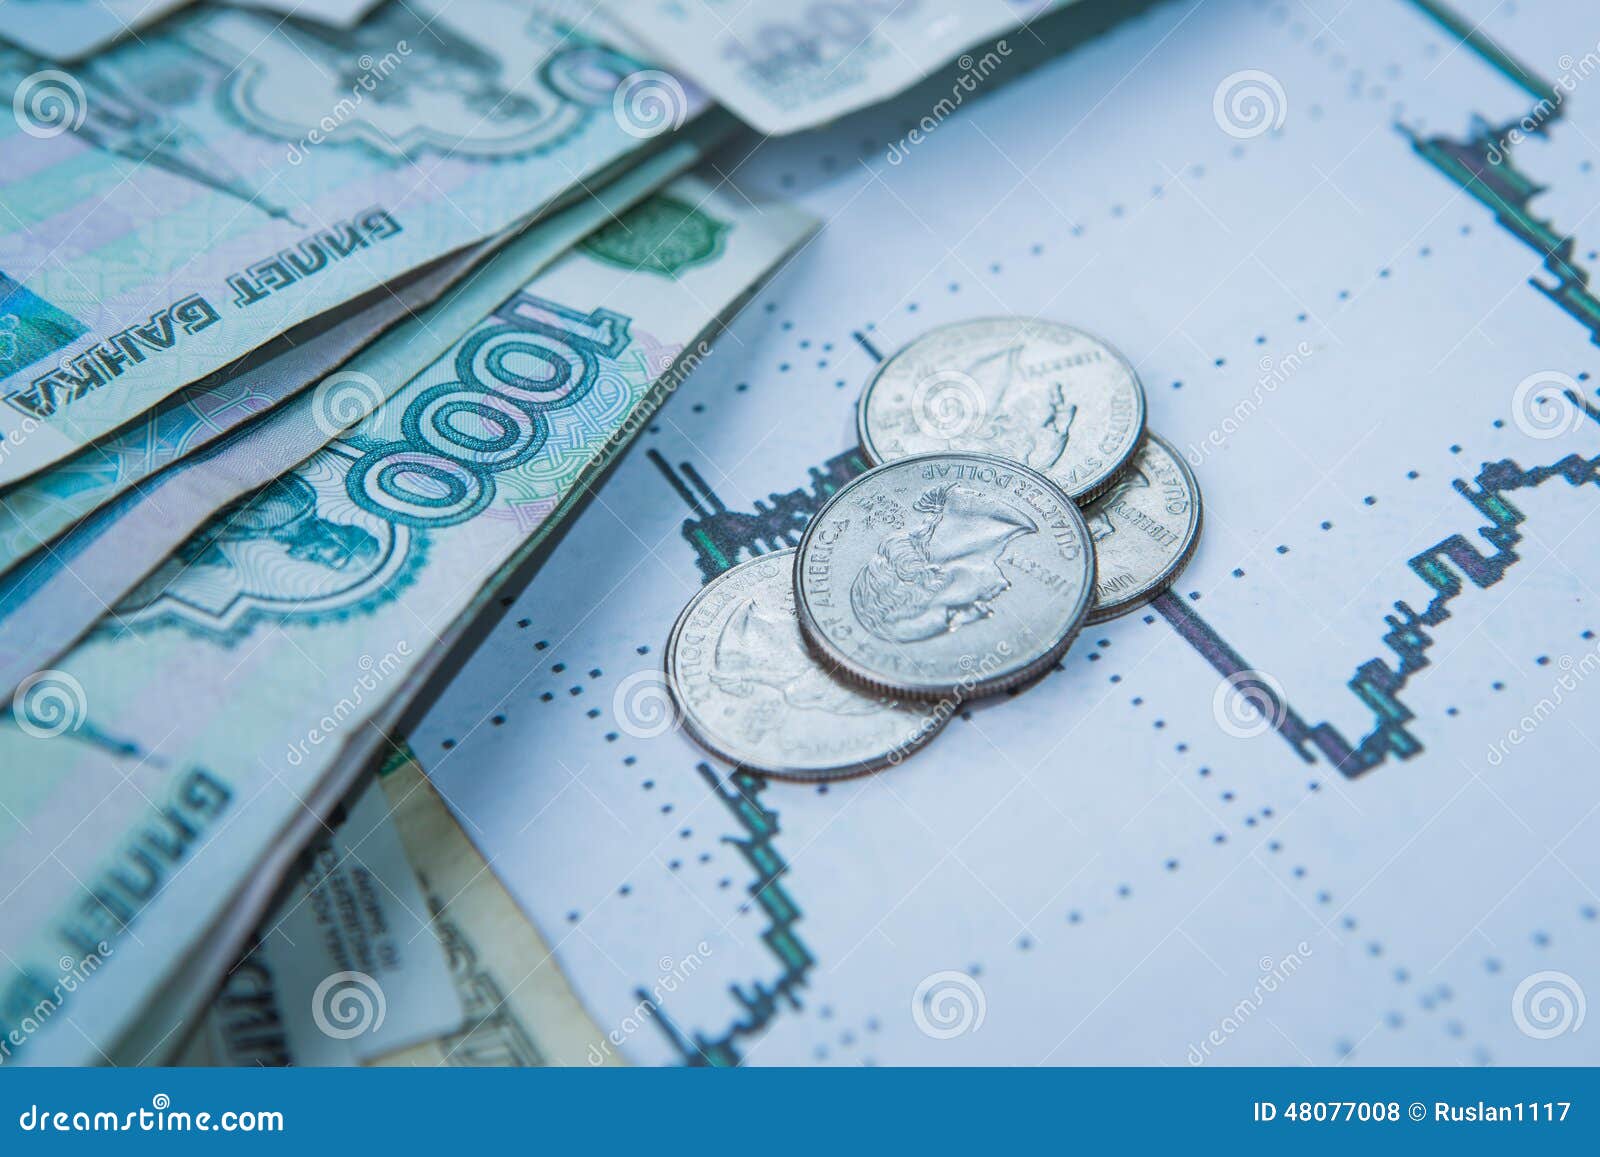 Ruble Exchange Rate On International Stock Exchanges ...